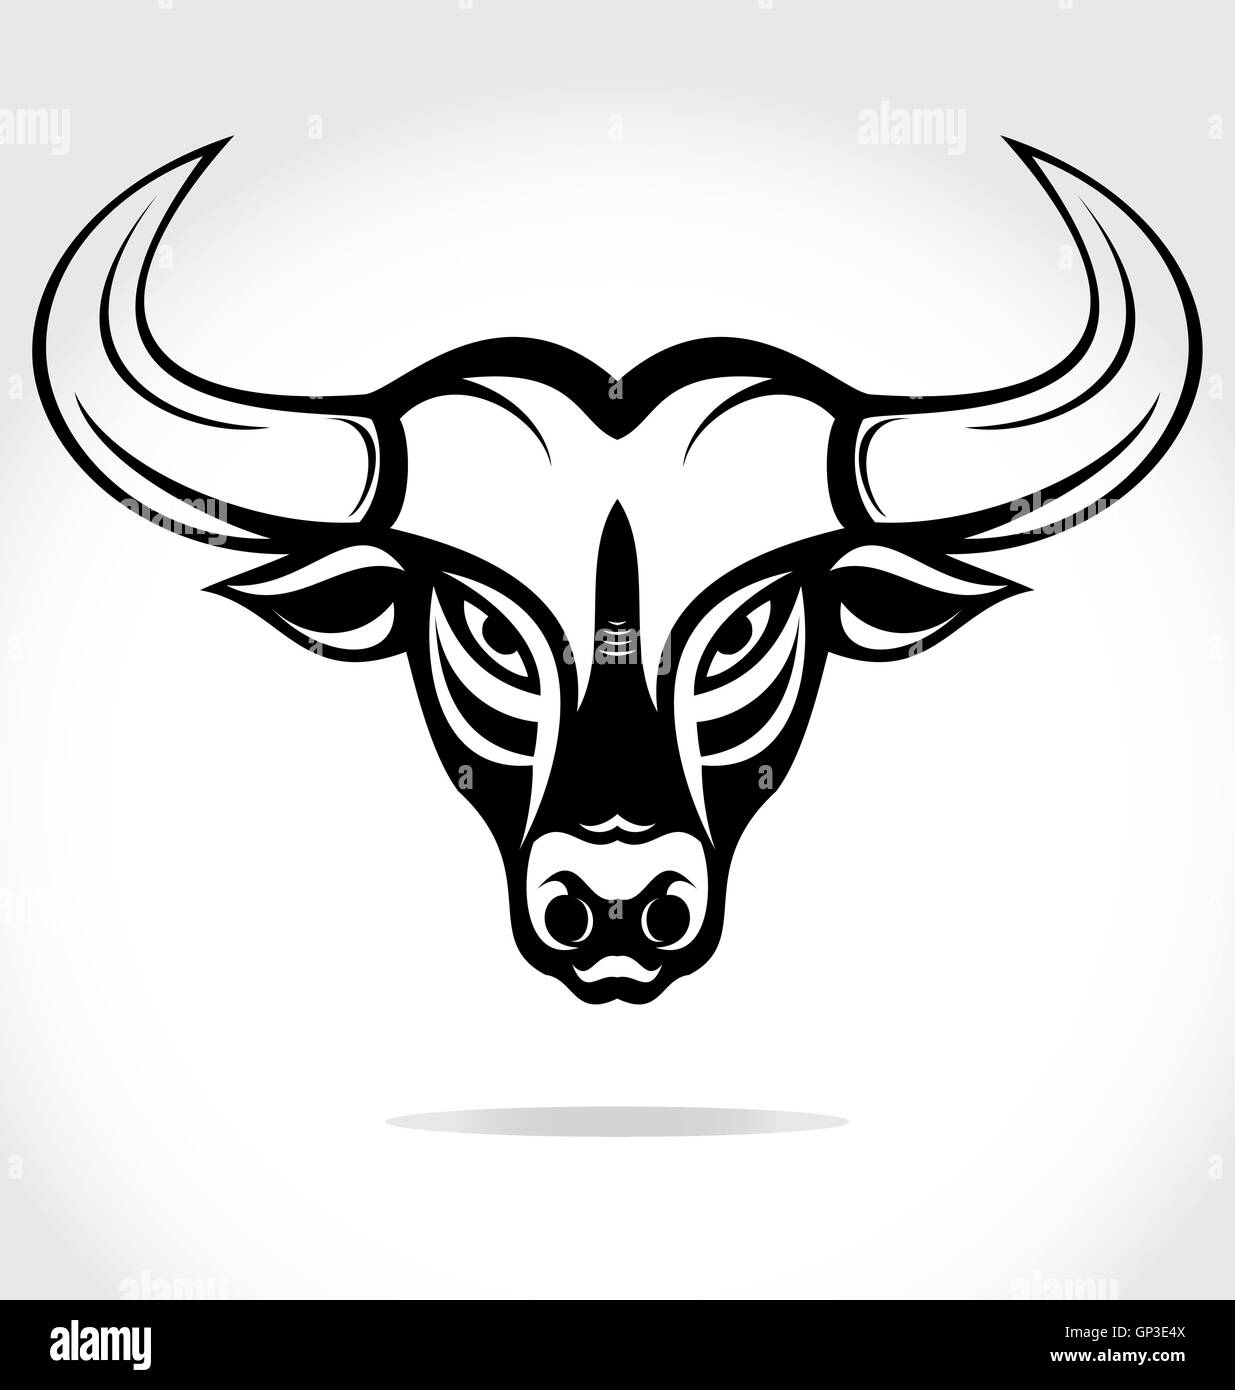 Bulls Head Tattoo Design Stock Vector Image & Art - Alamy